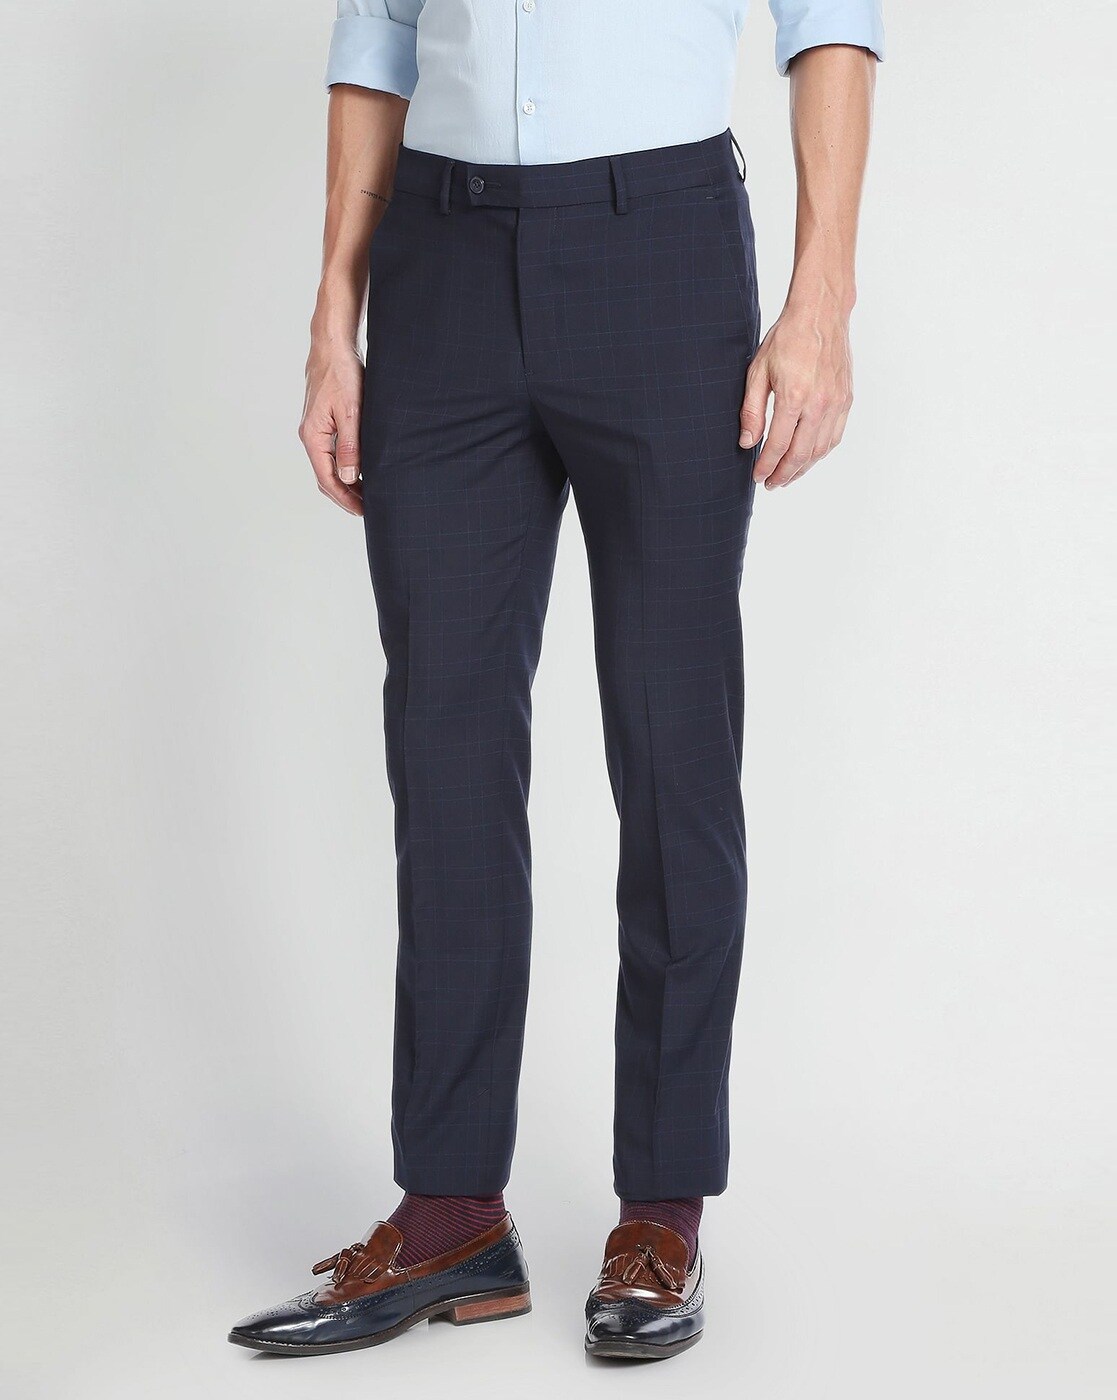 Buy Navy Blue Trousers & Pants for Men by Arrow Newyork Online